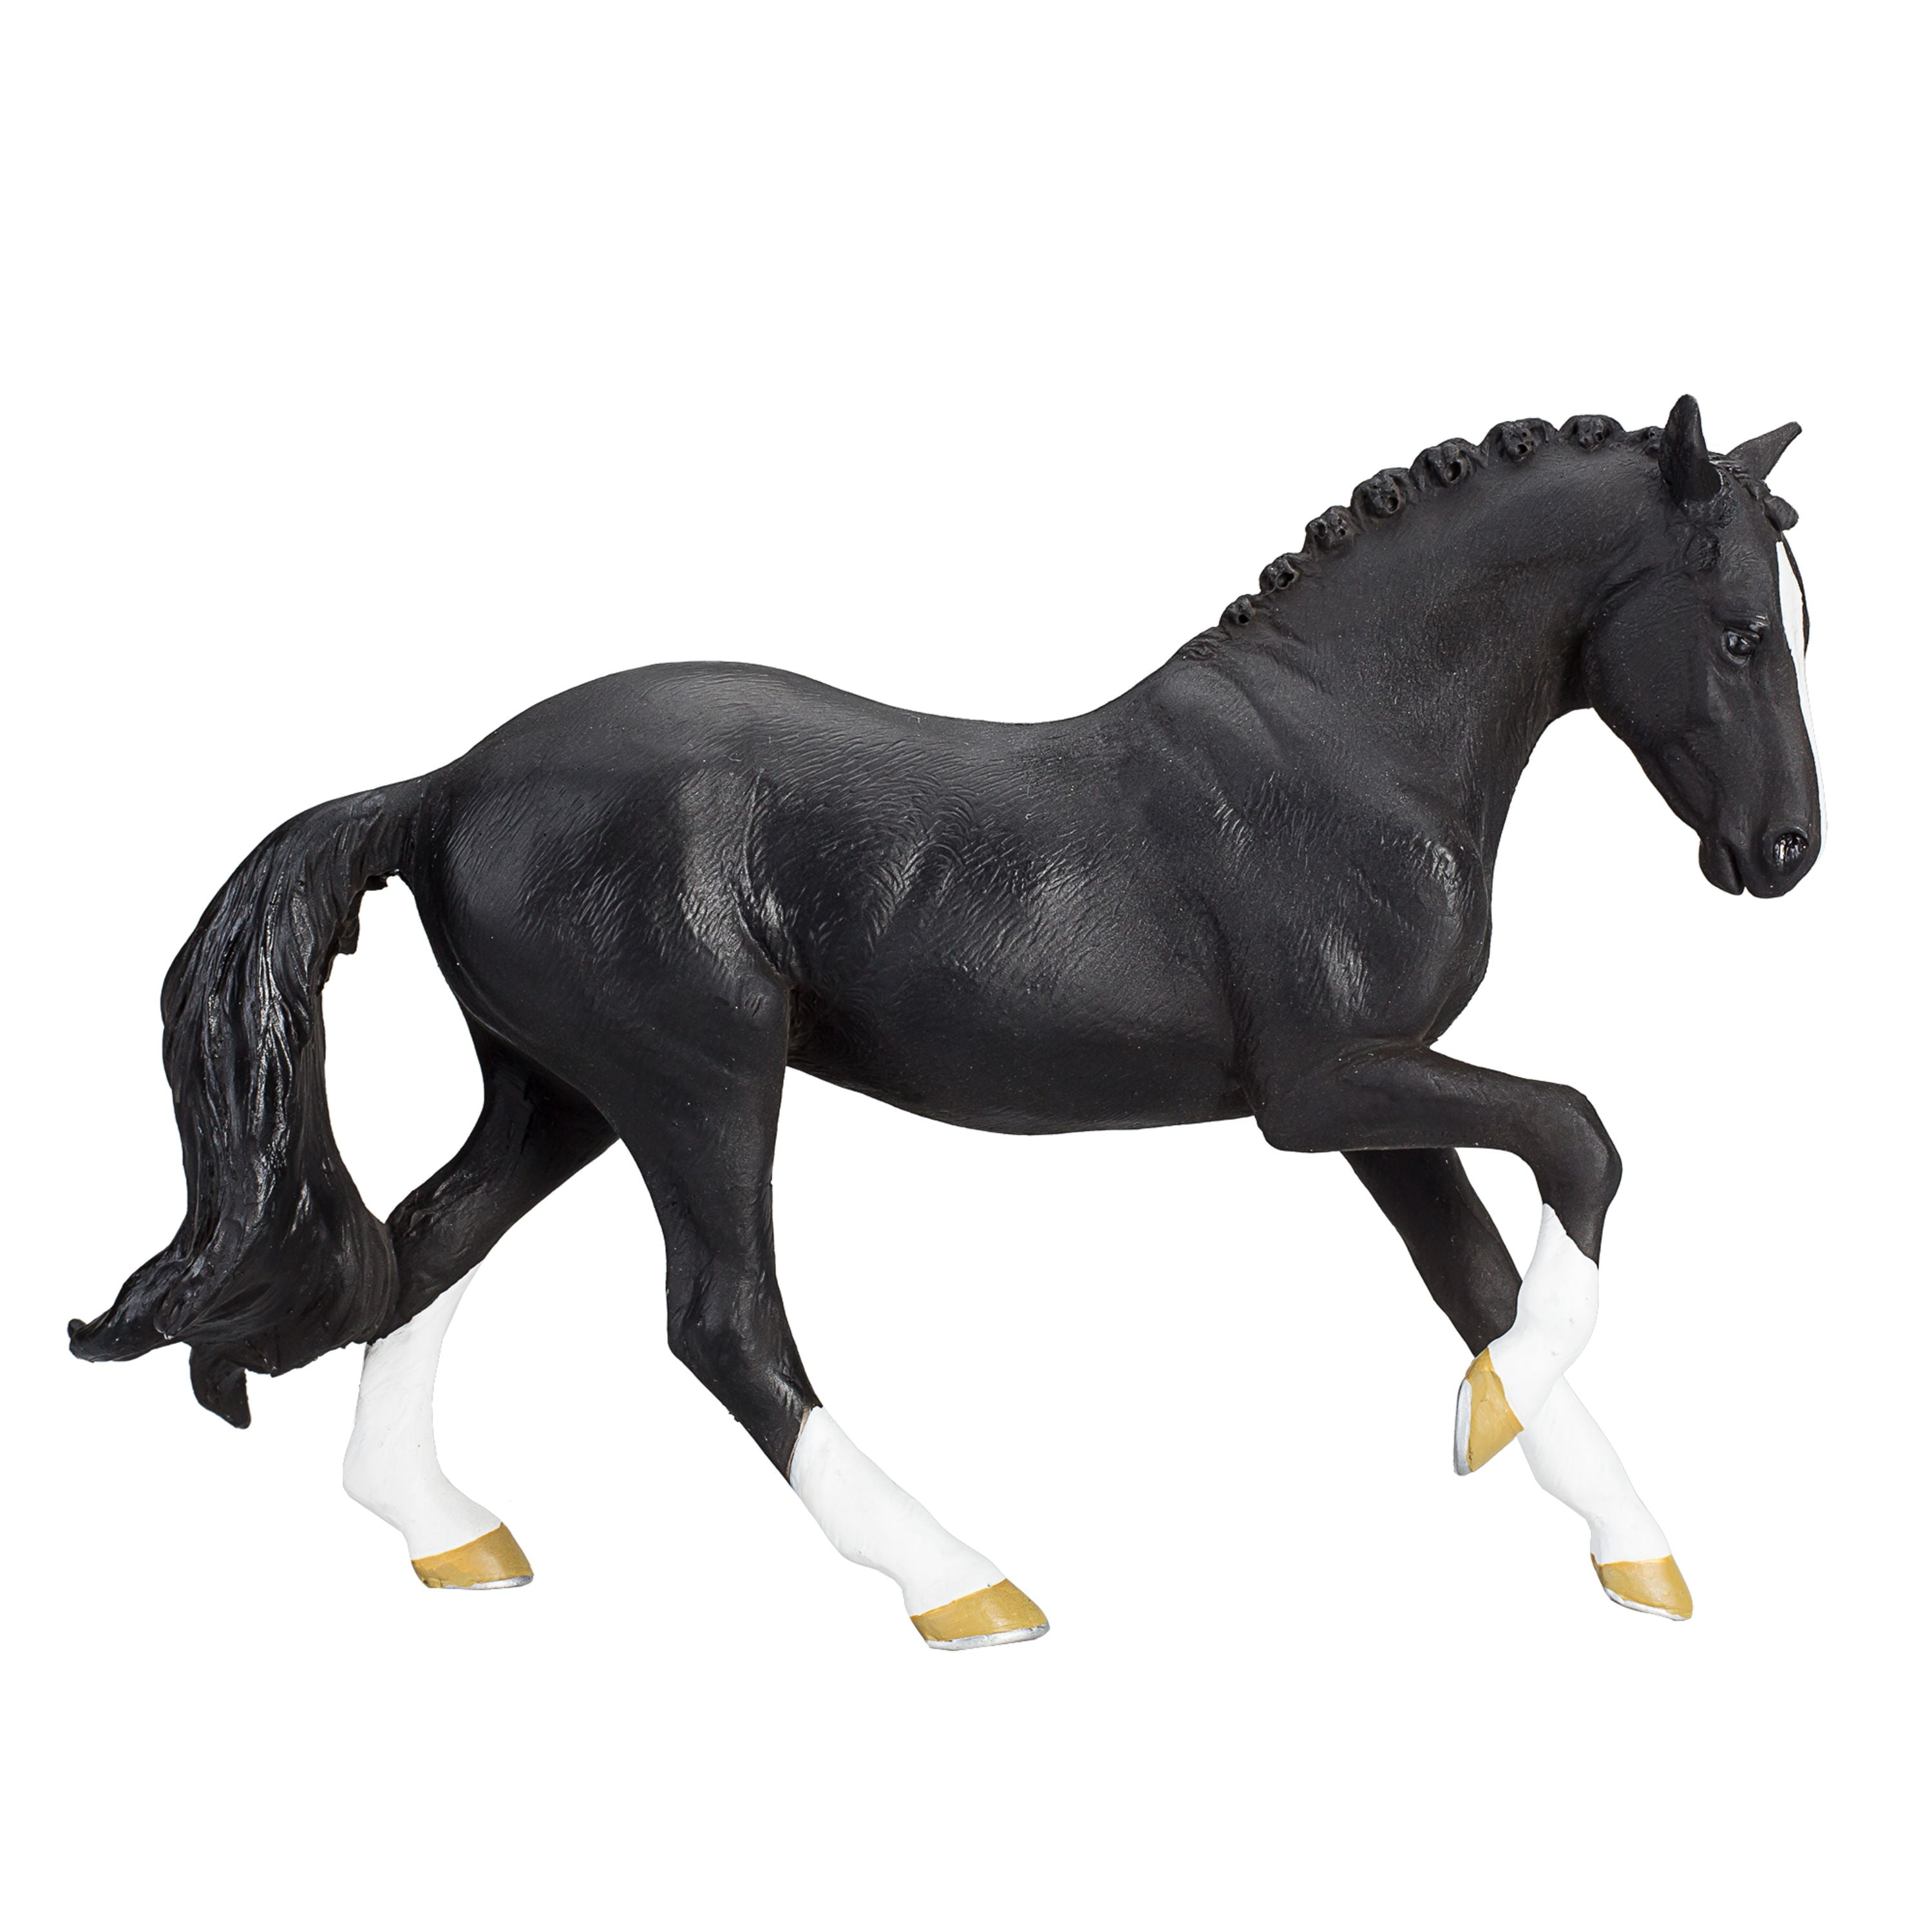 Details about   Mojo ARABIAN MARE HORSE toys model figure kid girls plastic animal farm figurine 